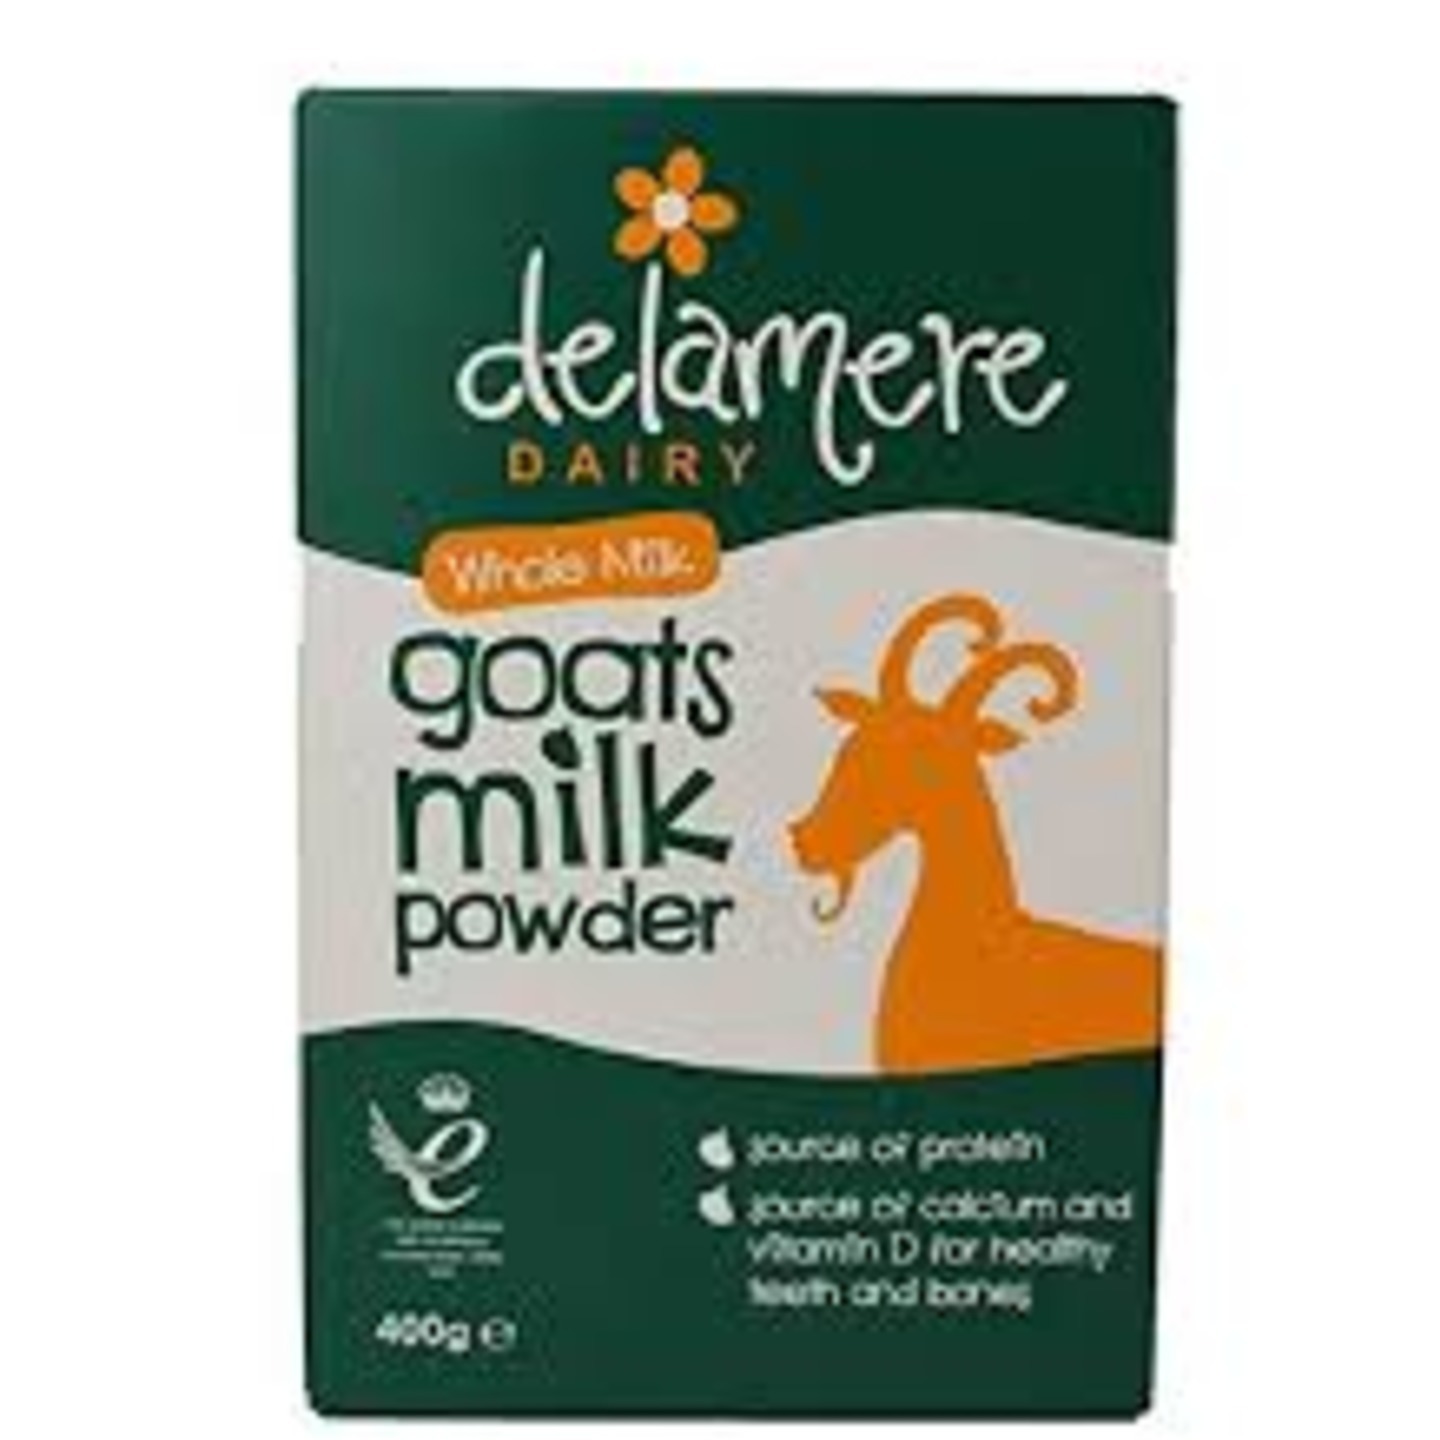 Delamere Goats Milk Powder 400g